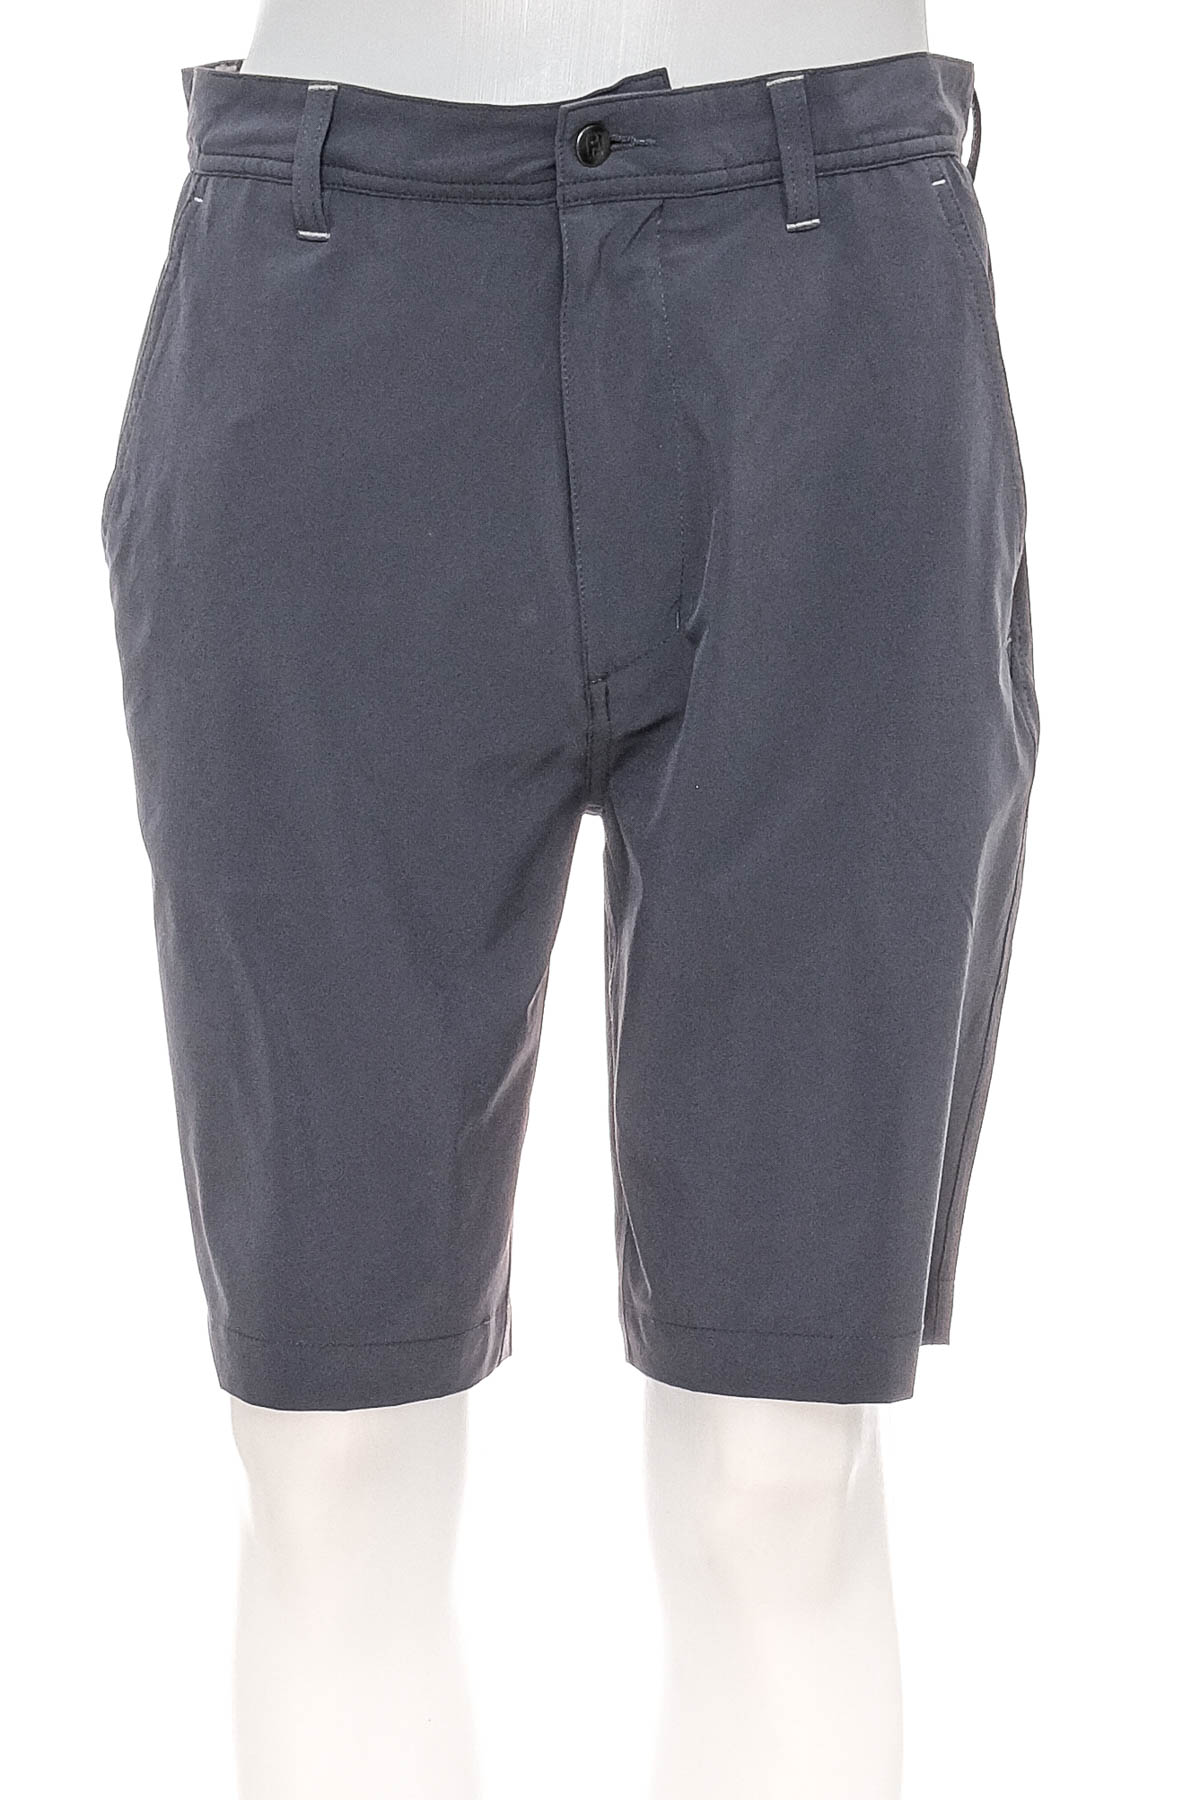 Men's shorts - FootJoy - 0